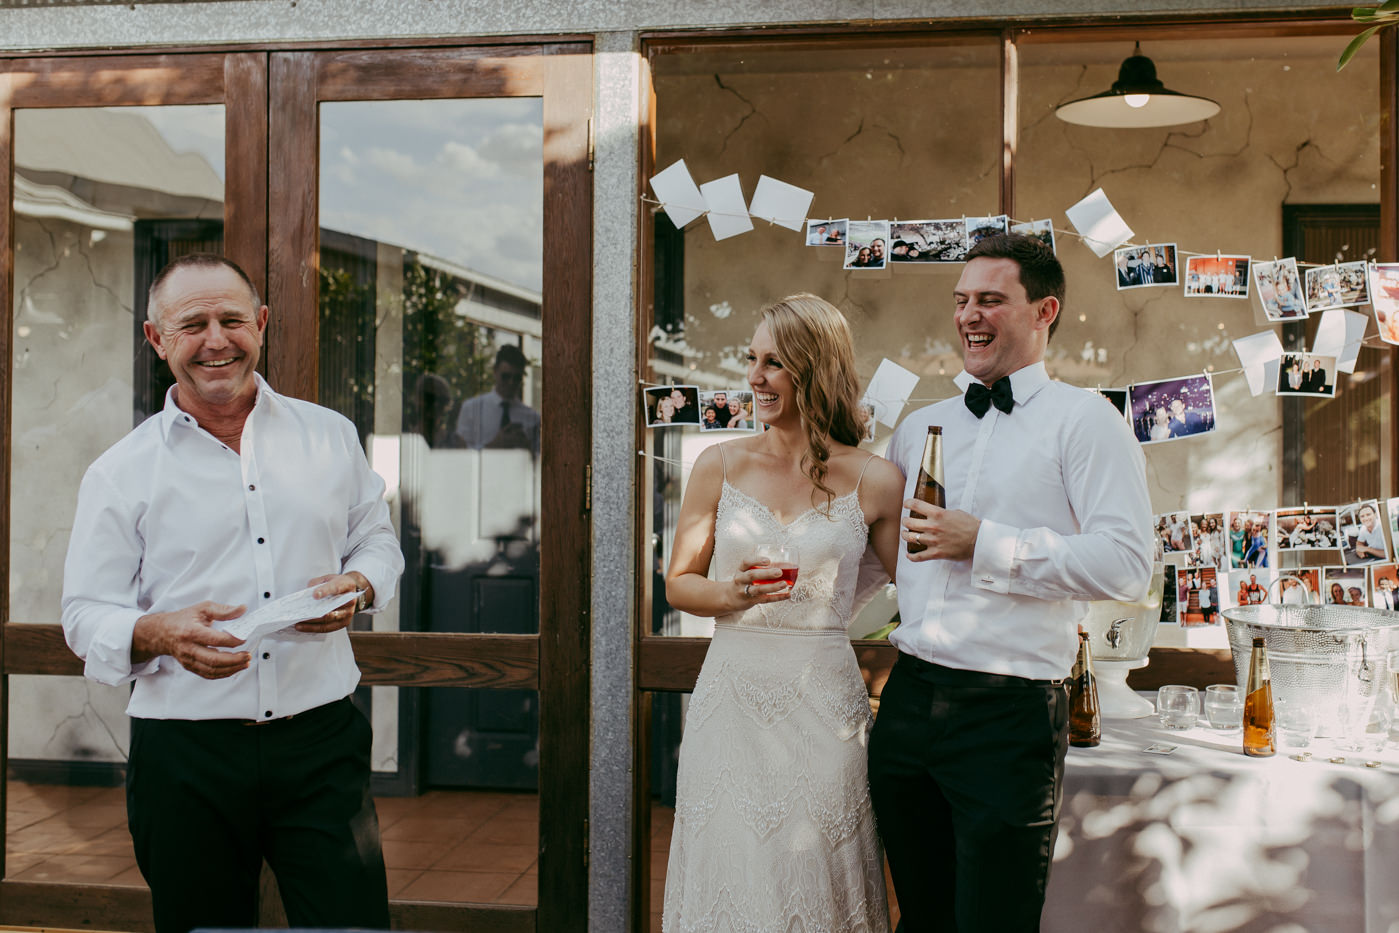 Anthony & Eliet - Wagga Wagga Wedding - Country NSW - Samantha Heather Photography-122.jpg